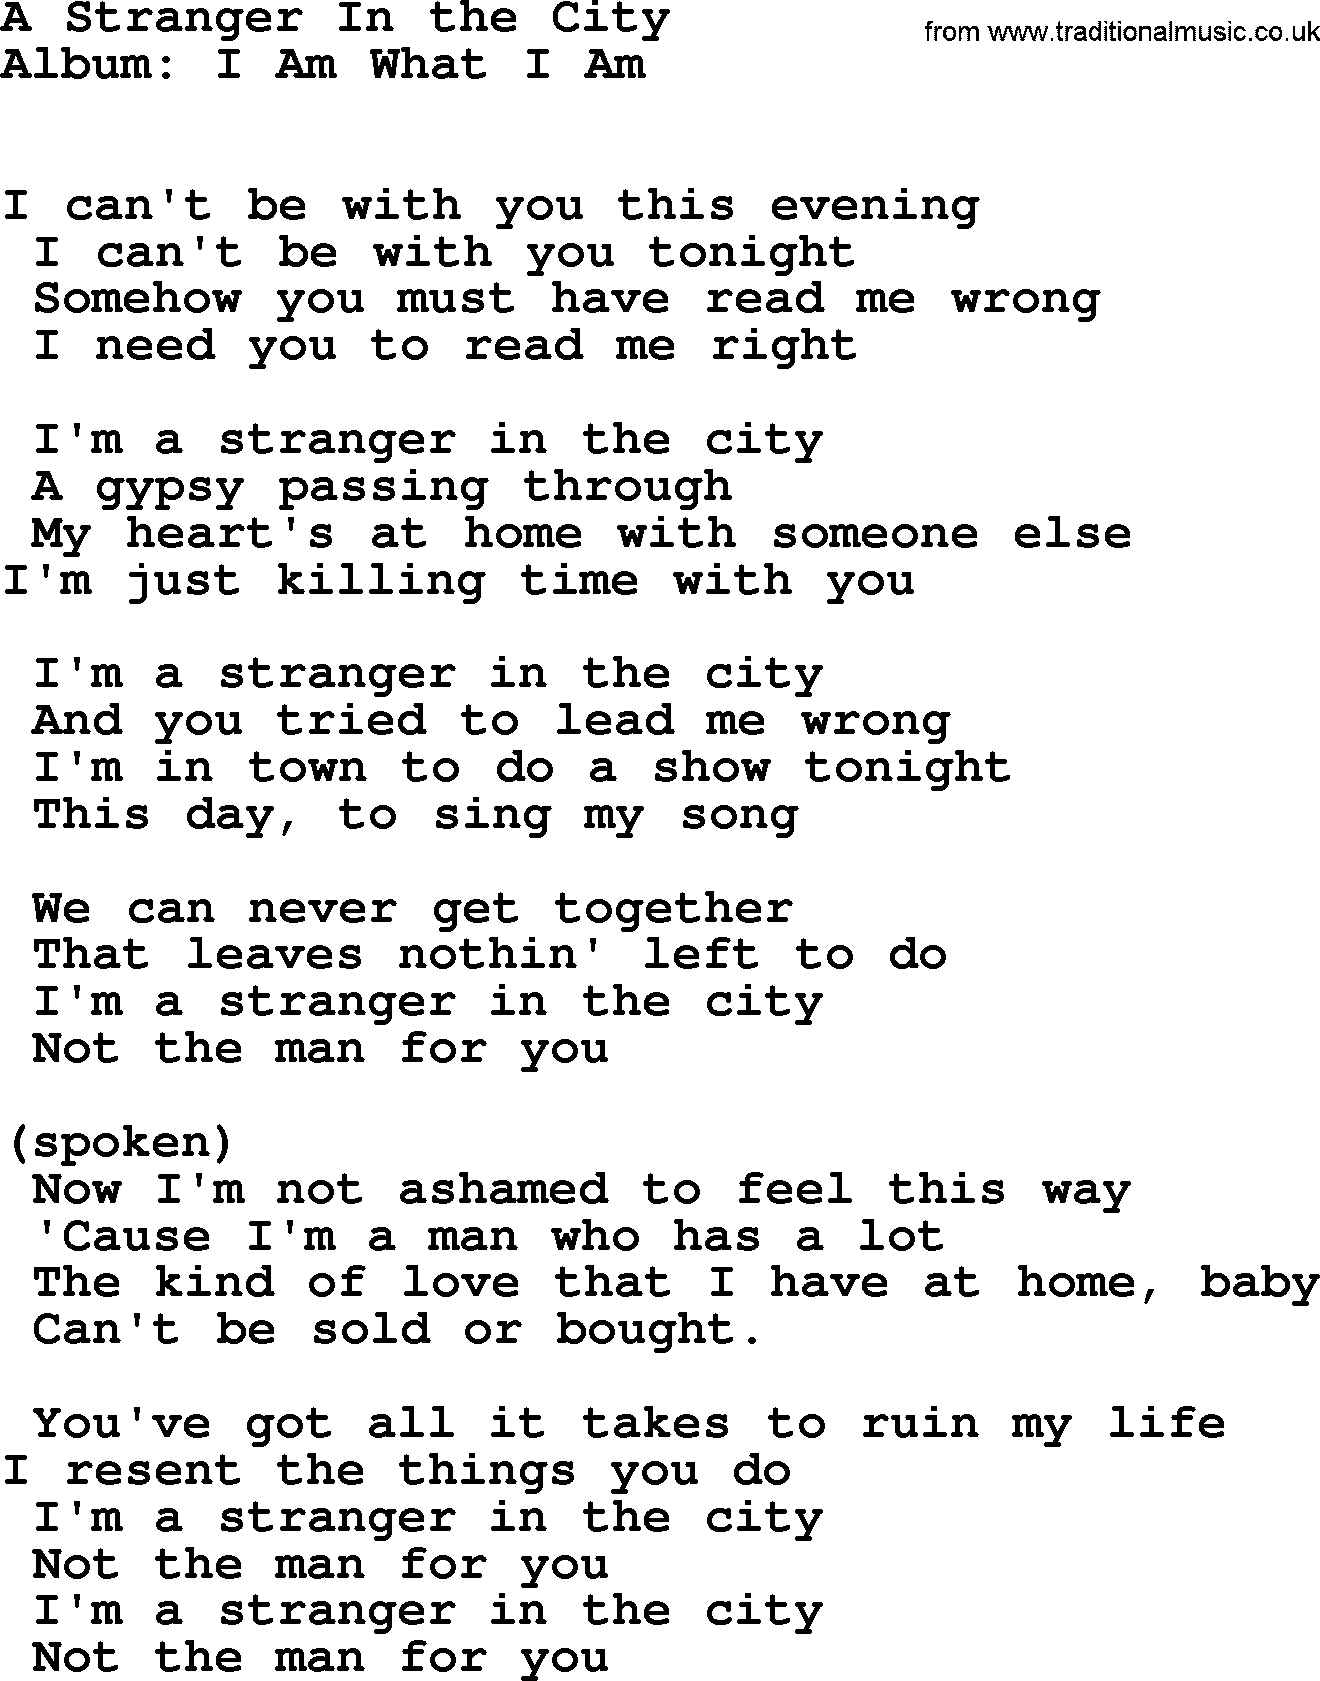 Merle Haggard song: A Stranger In The City, lyrics.